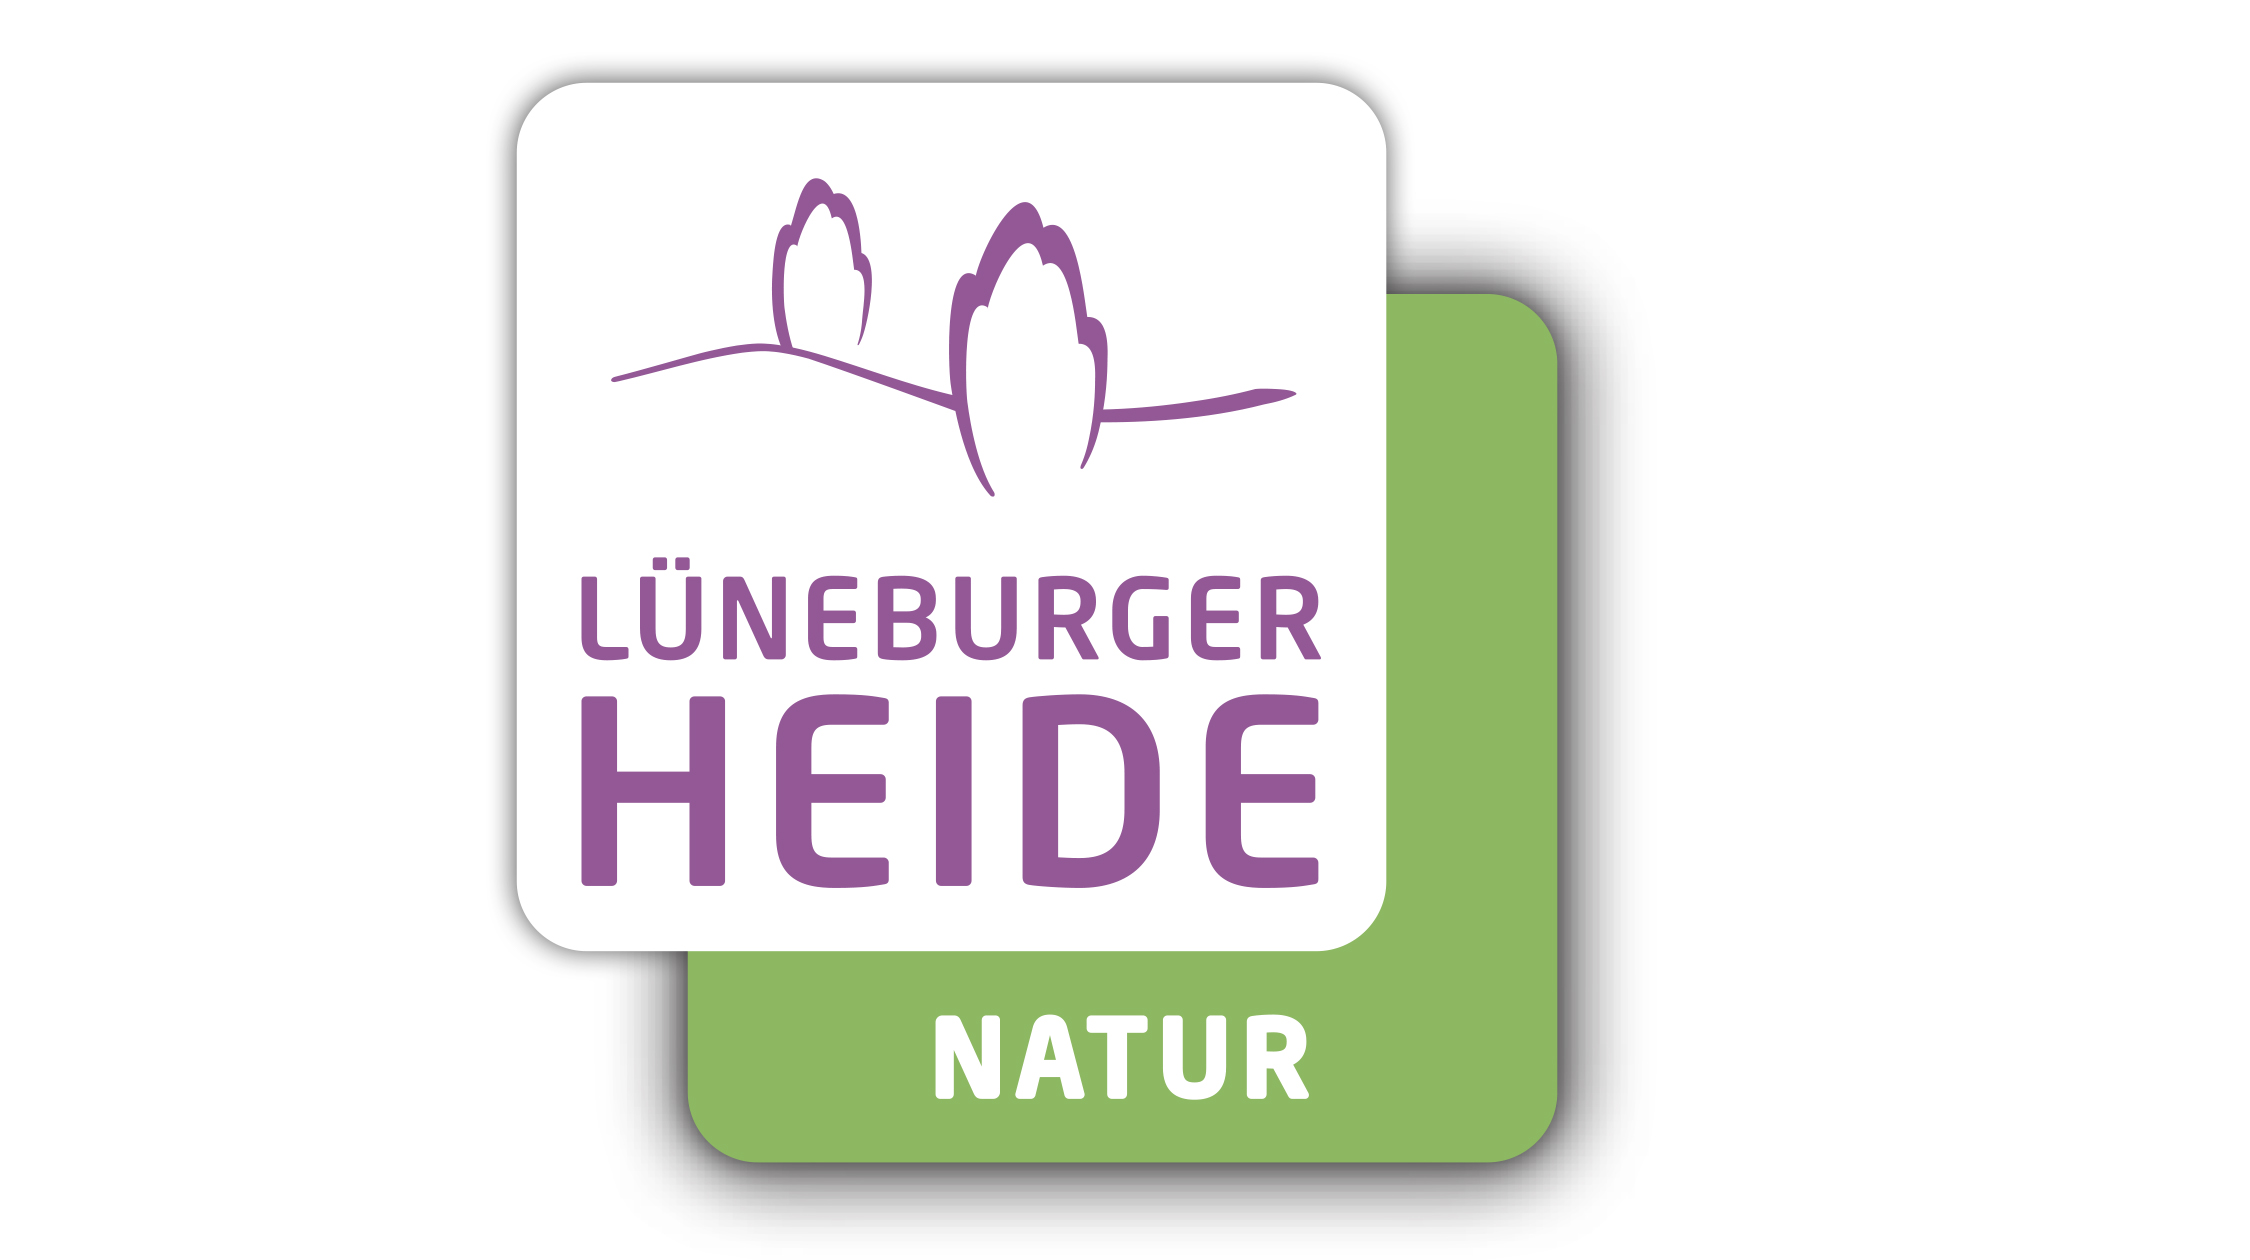 Lüneburger Heide GmbH